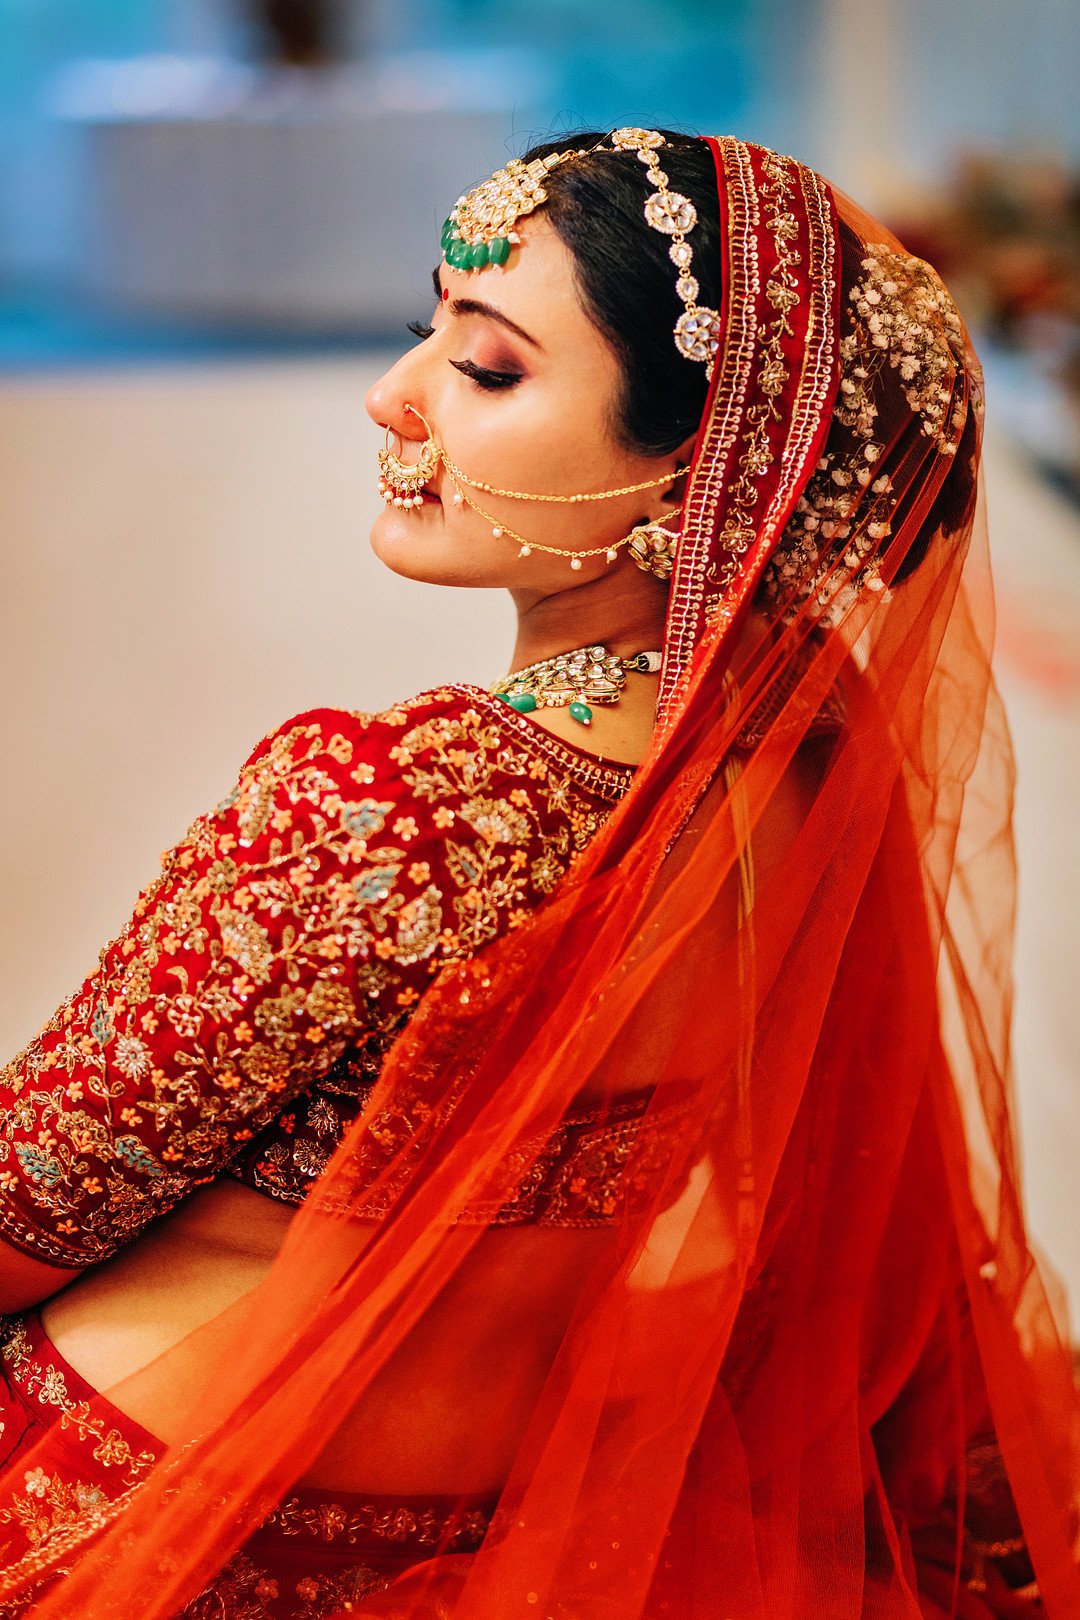 Modi_Shah_DARS Photography_289 Krina & Parth's Wedding by DARS Photography_low.jpg